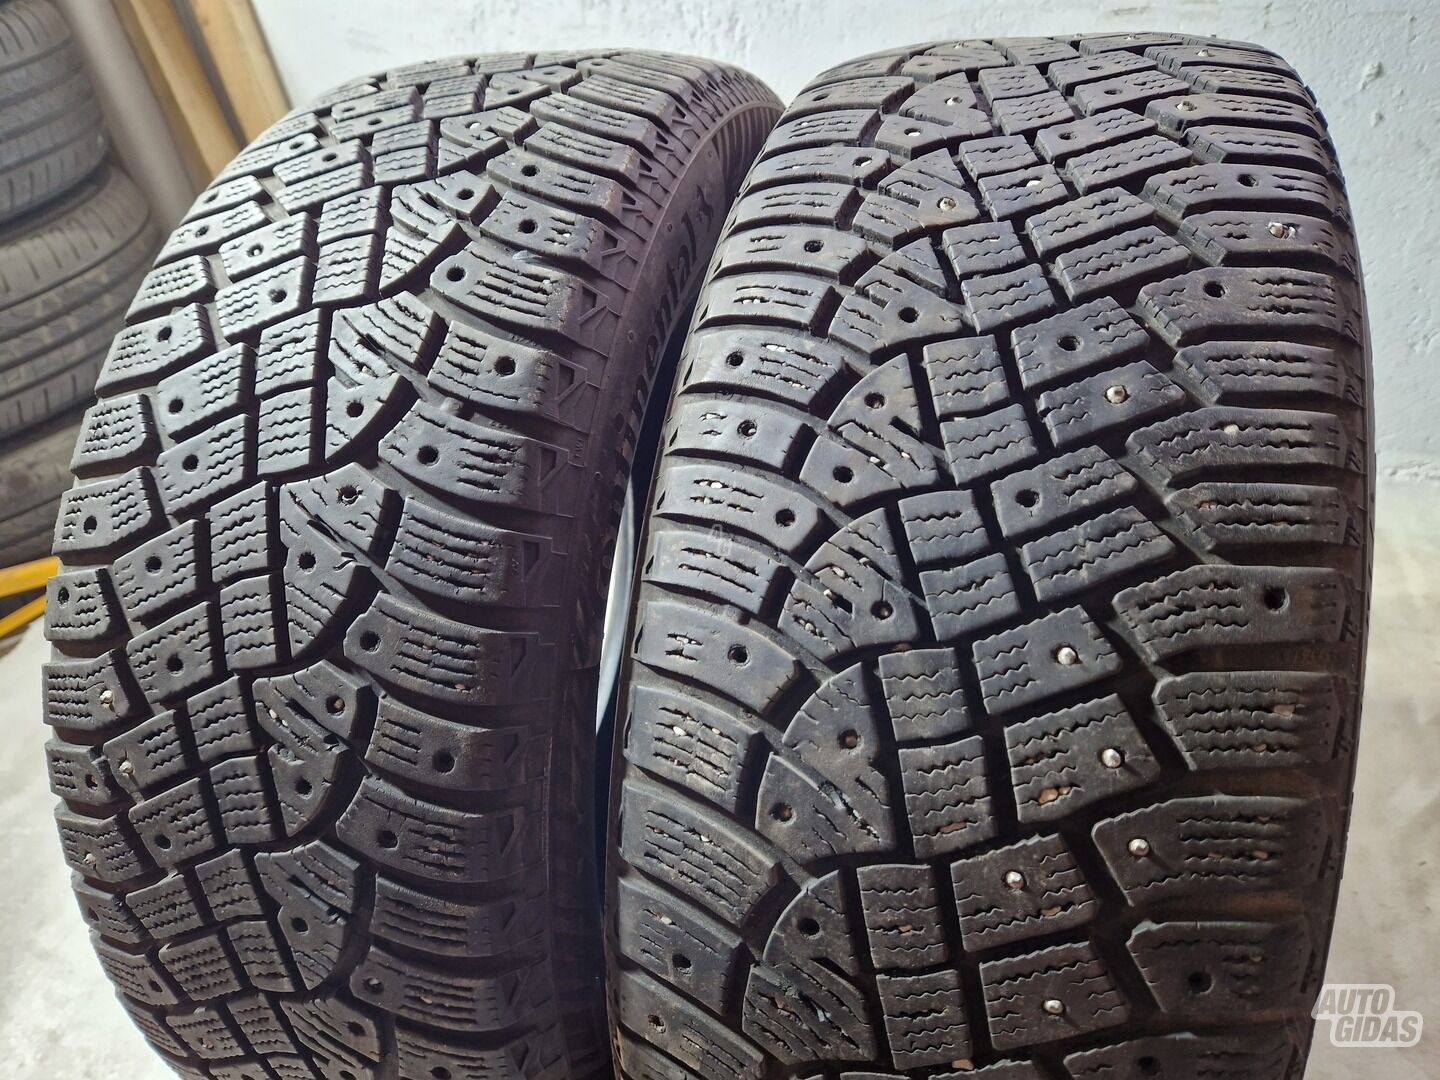 Continental 5-6mm, 2018m R17 winter tyres passanger car